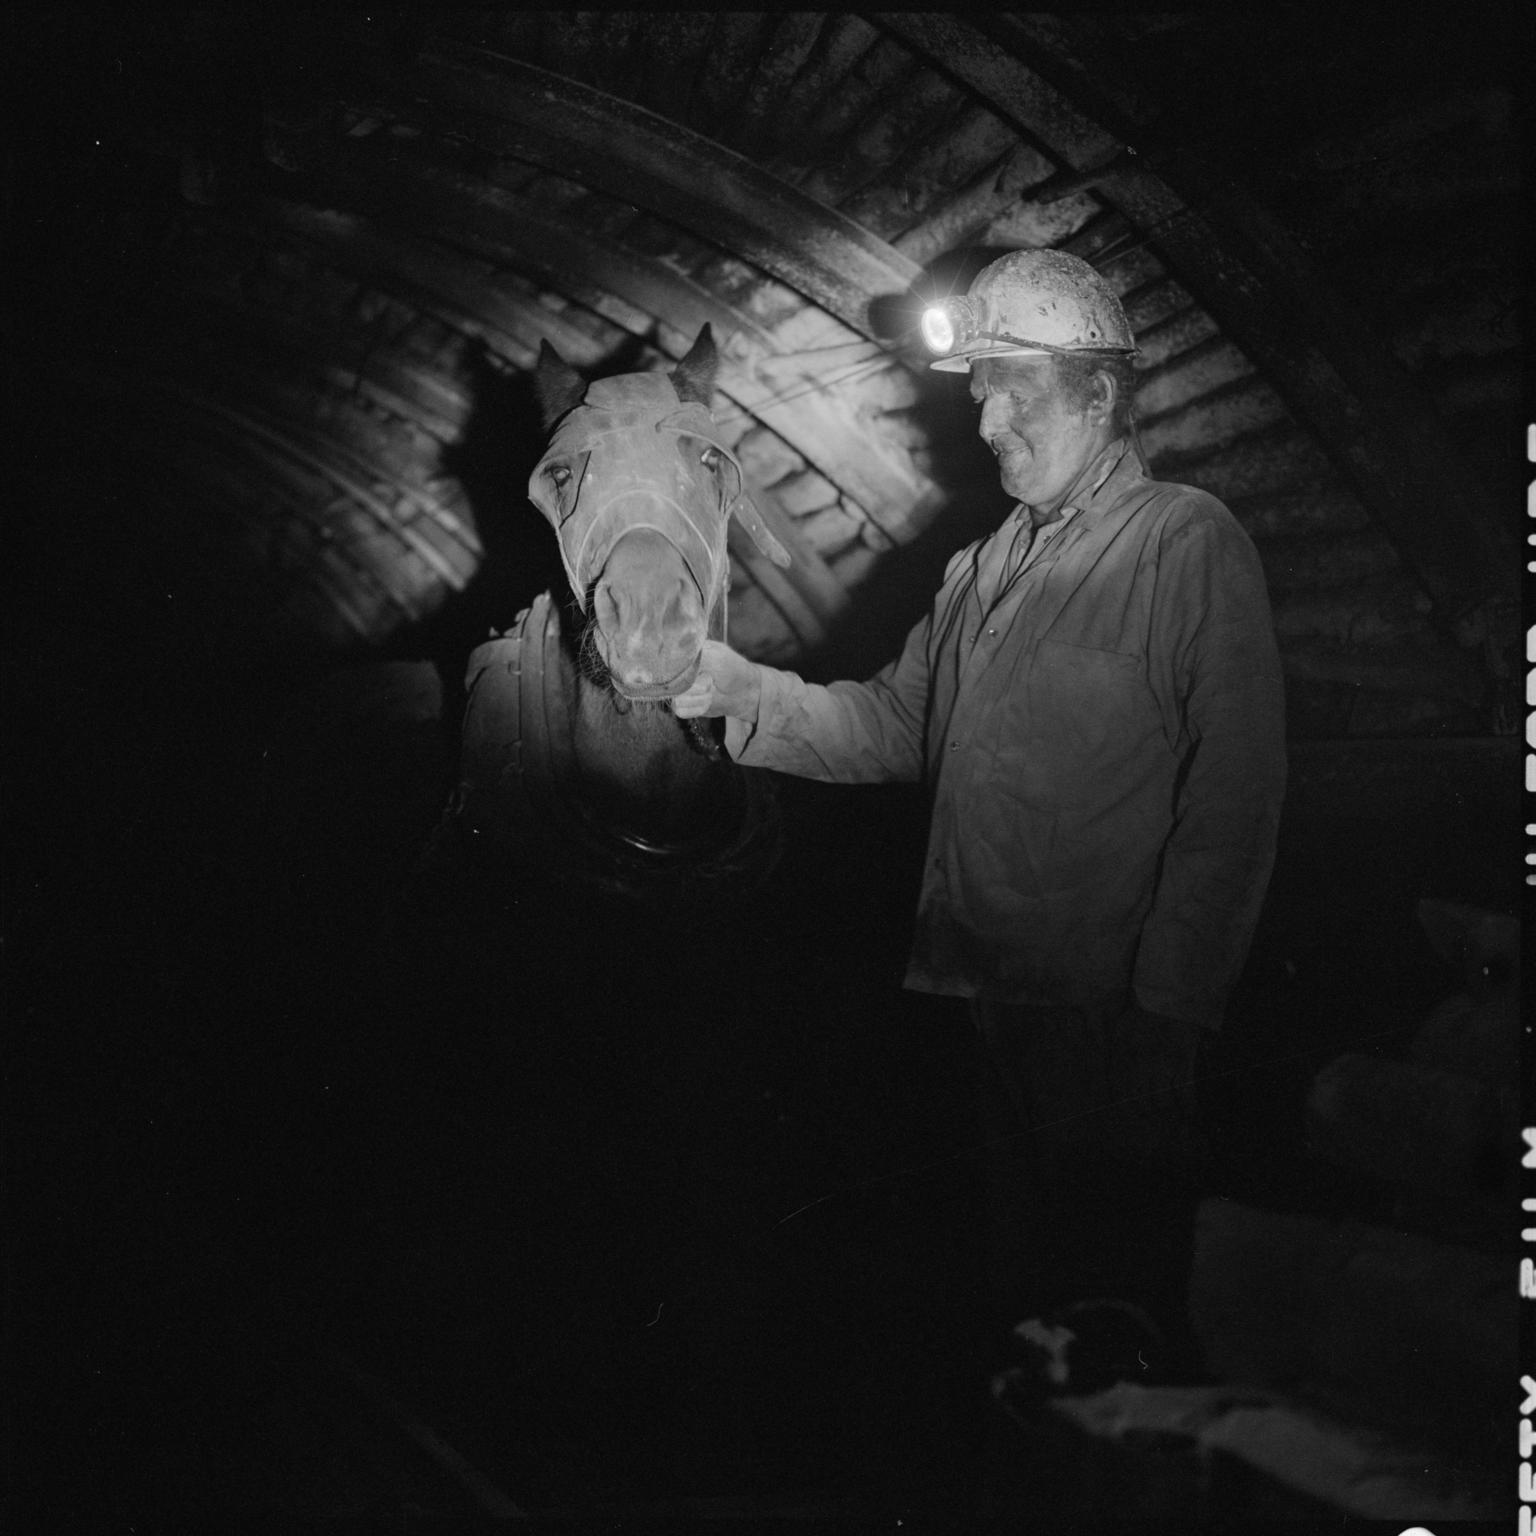 Lady Windsor Colliery, film negative